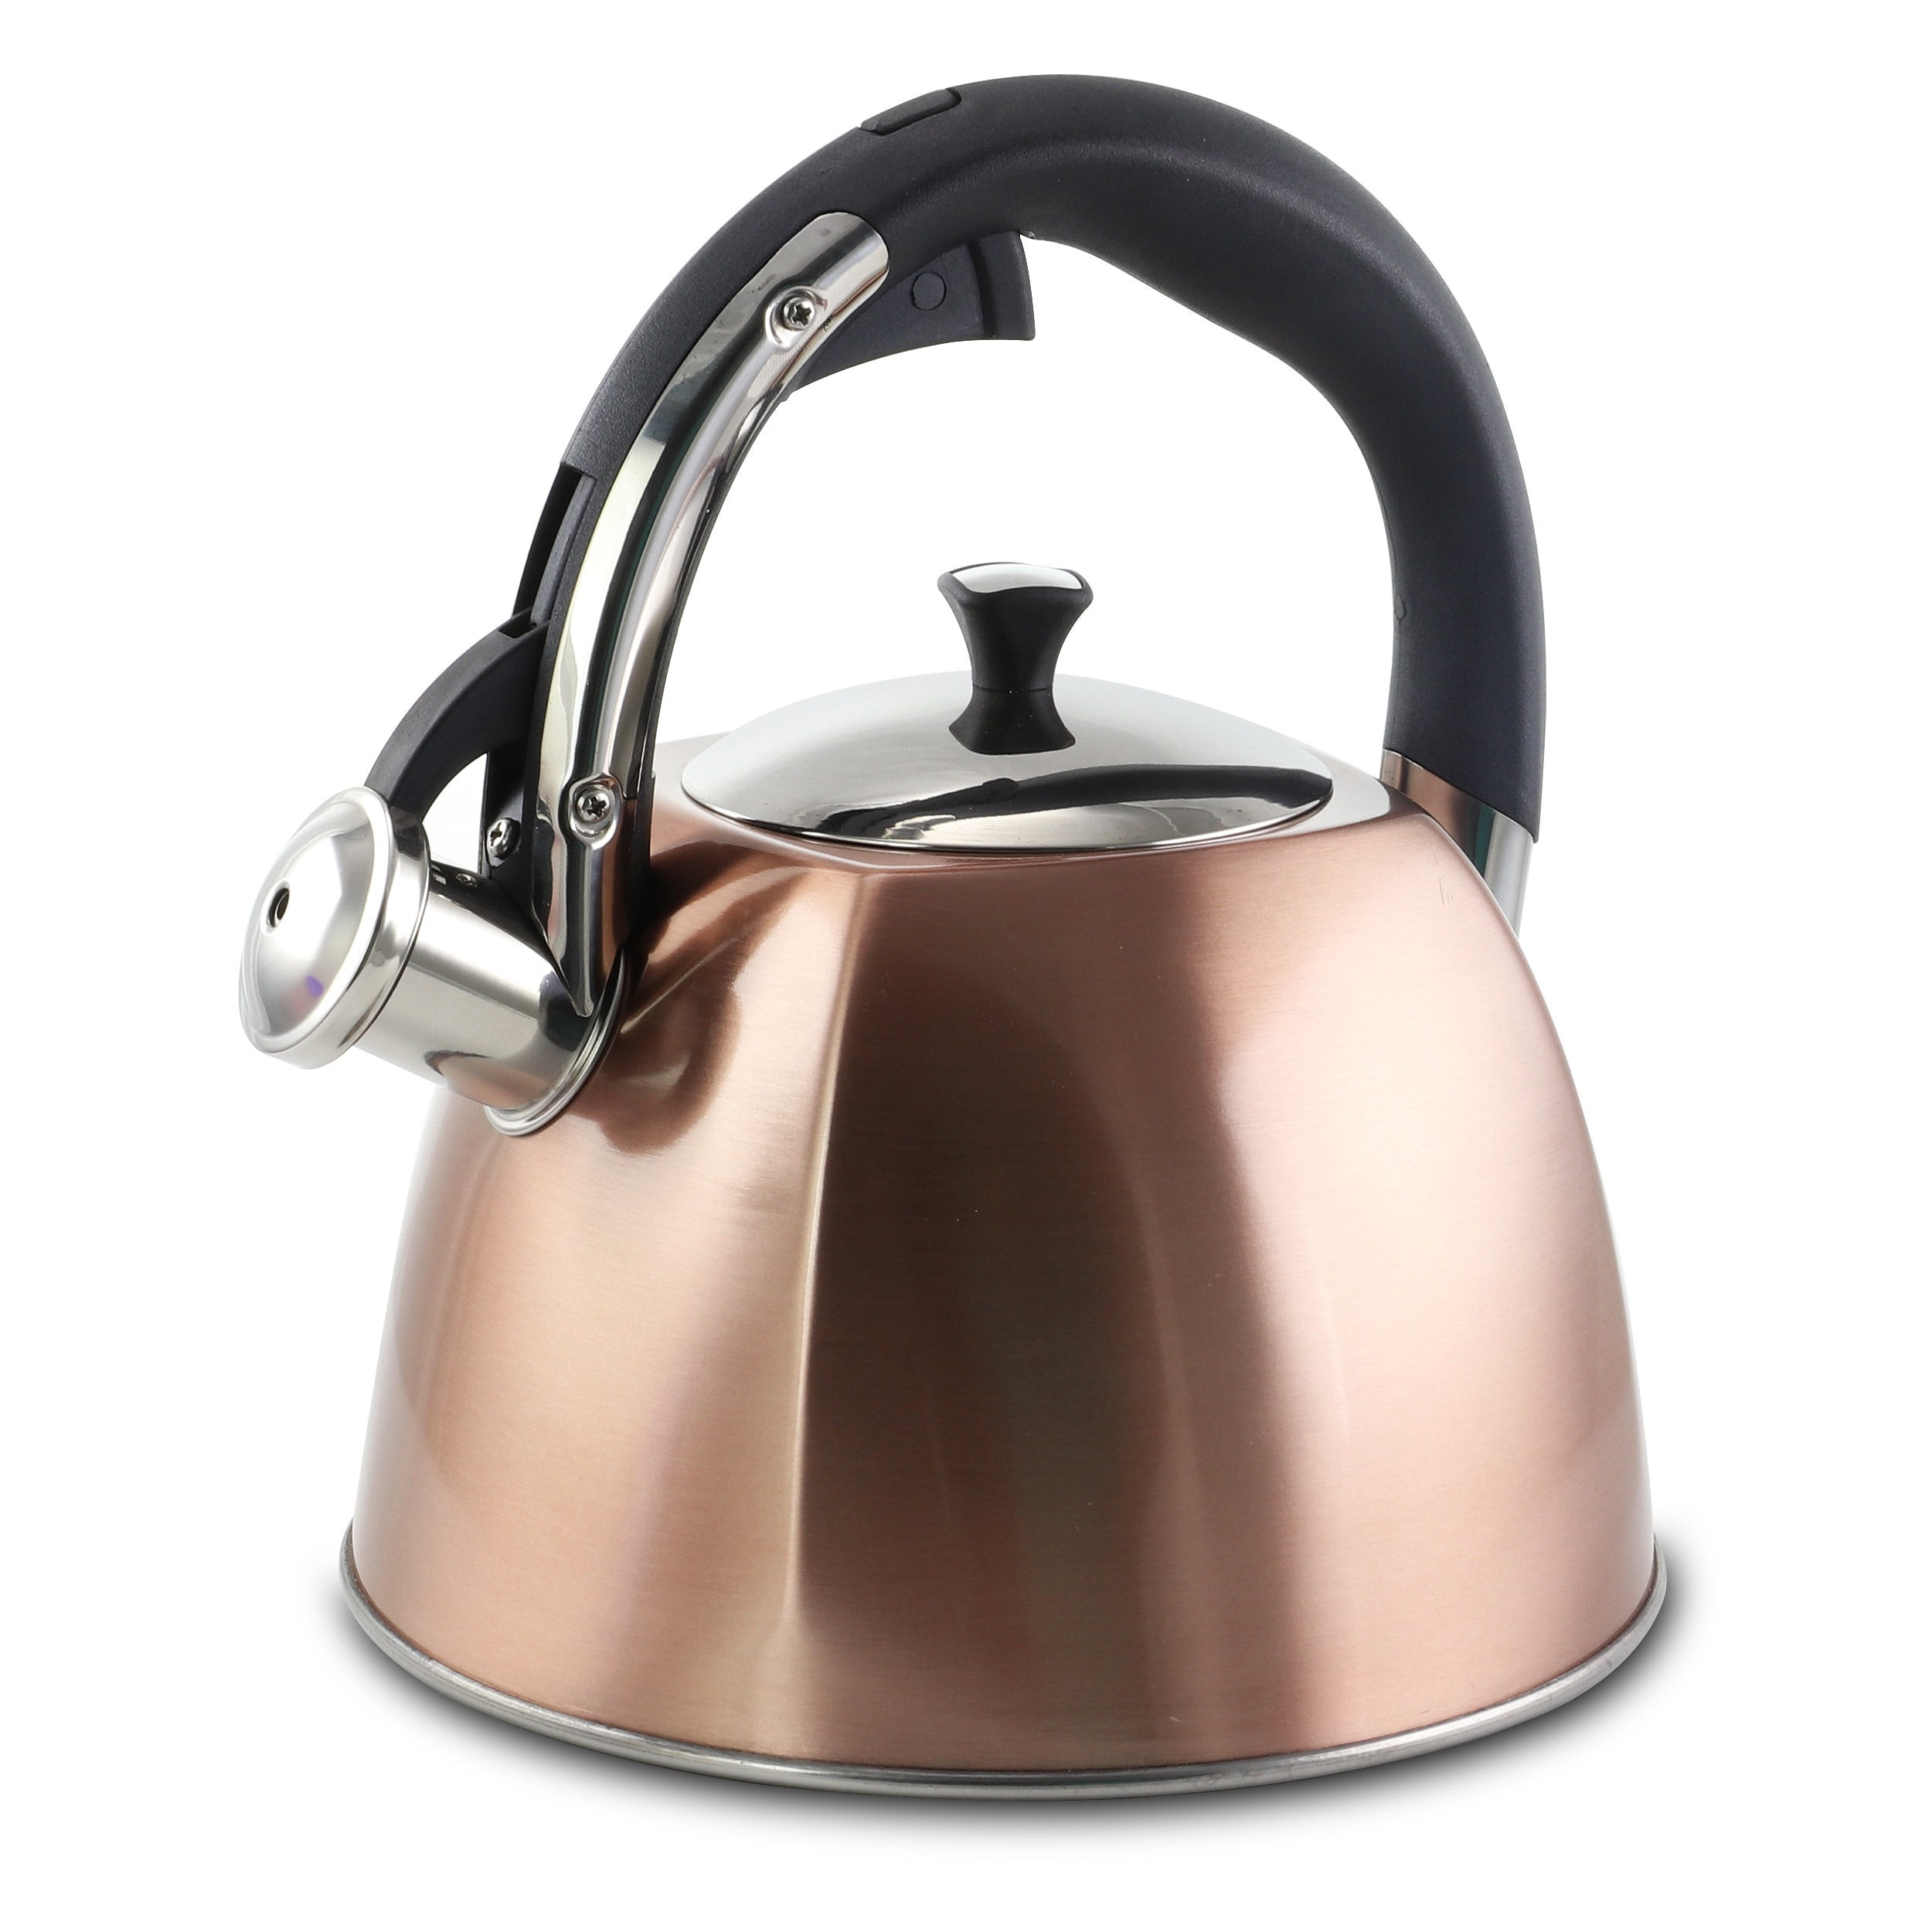 https://ak1.ostkcdn.com/images/products/is/images/direct/1205667b7a590e7bcb6f08df7c558ec0b9d80766/Mr-Coffee-Belgrove-2.5-Quart-Whistling-Tea-Kettle-in-Copper.jpg